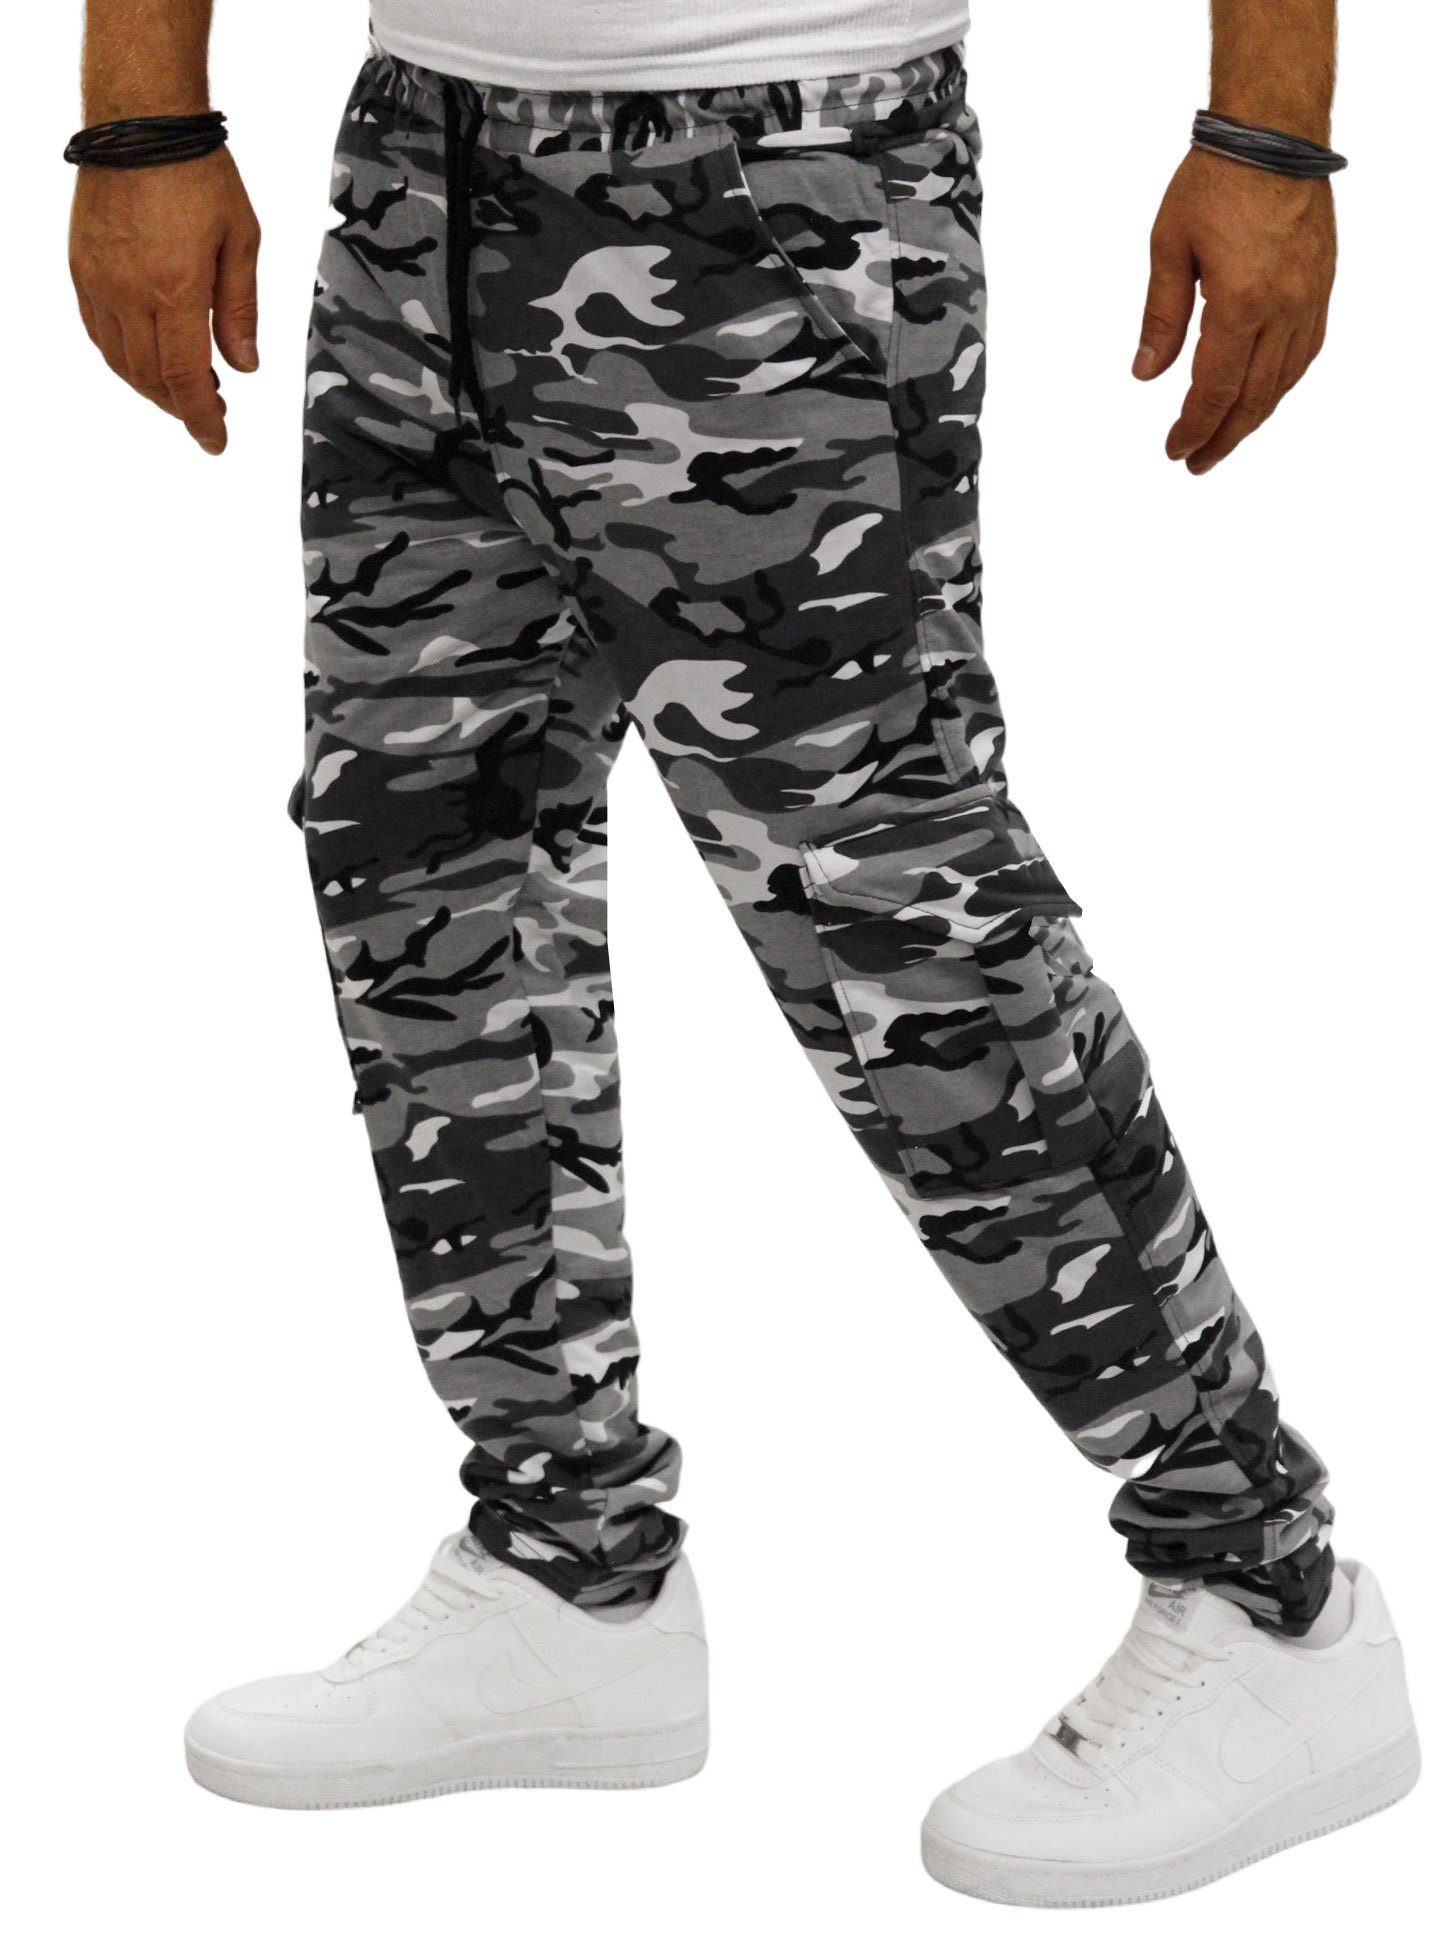 Fitnesshose Jogginghose RMK Trainingshose Hose Camouflage-Hell Camouflage Tarn Army Herren